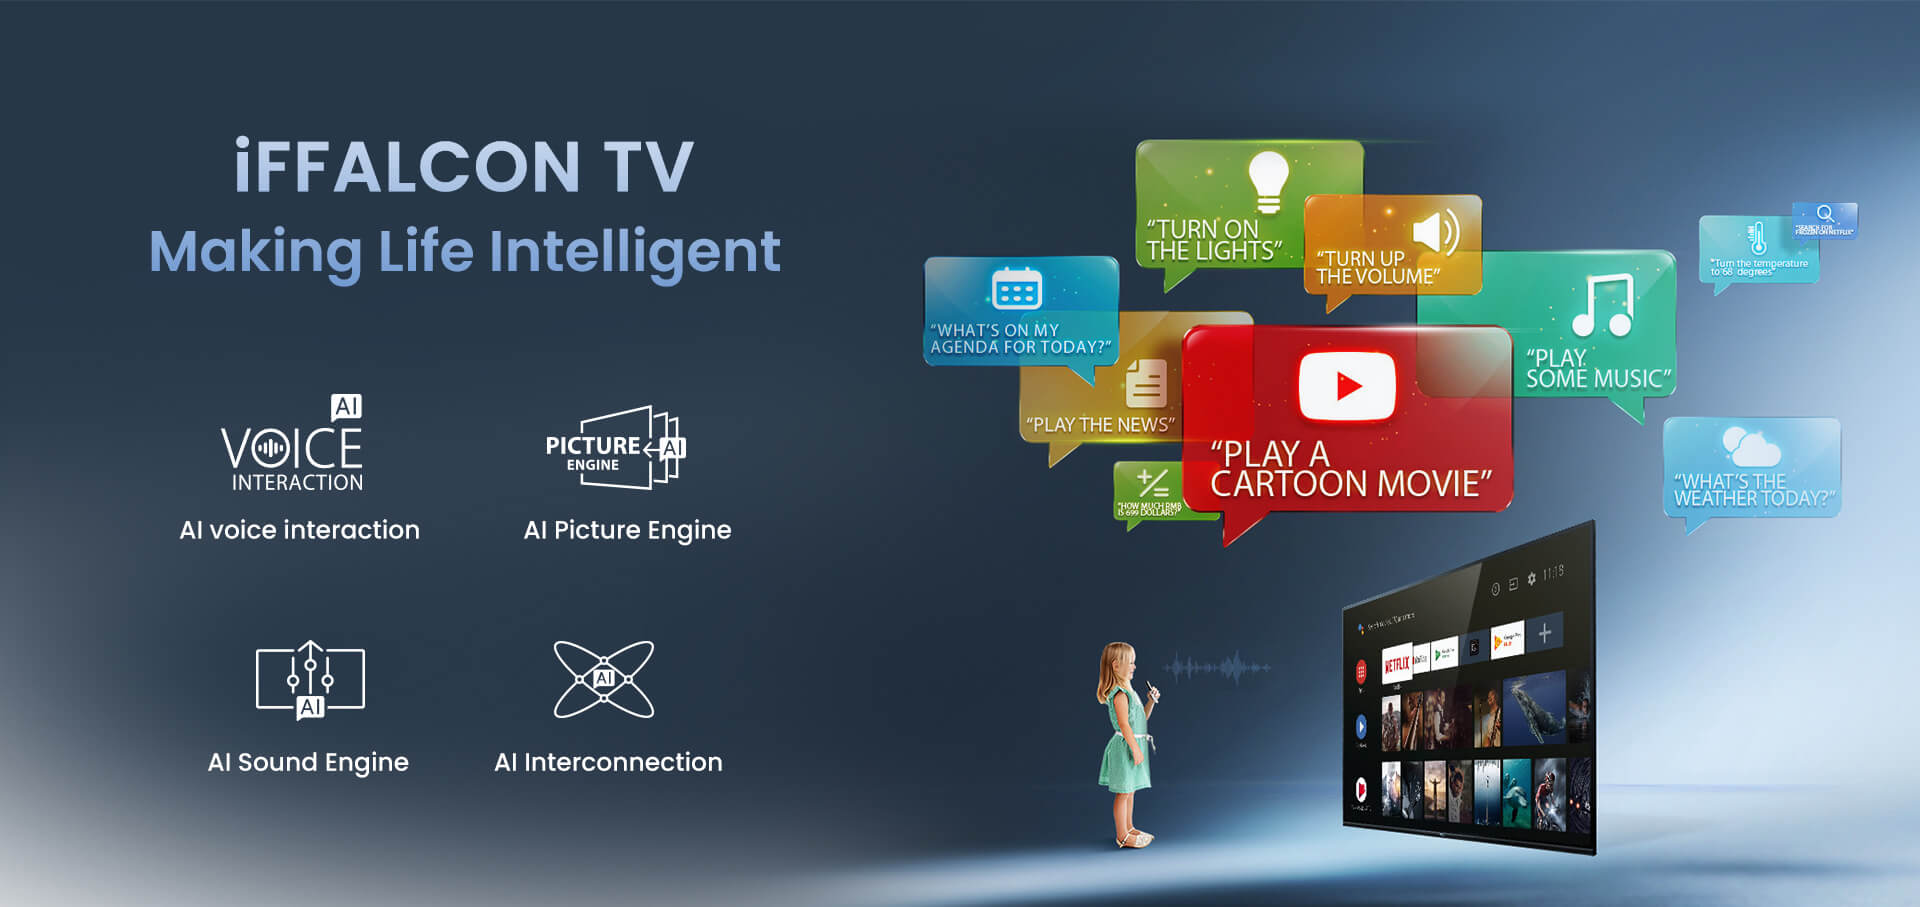 iFFALCON U61 TV Making Life Intelligent